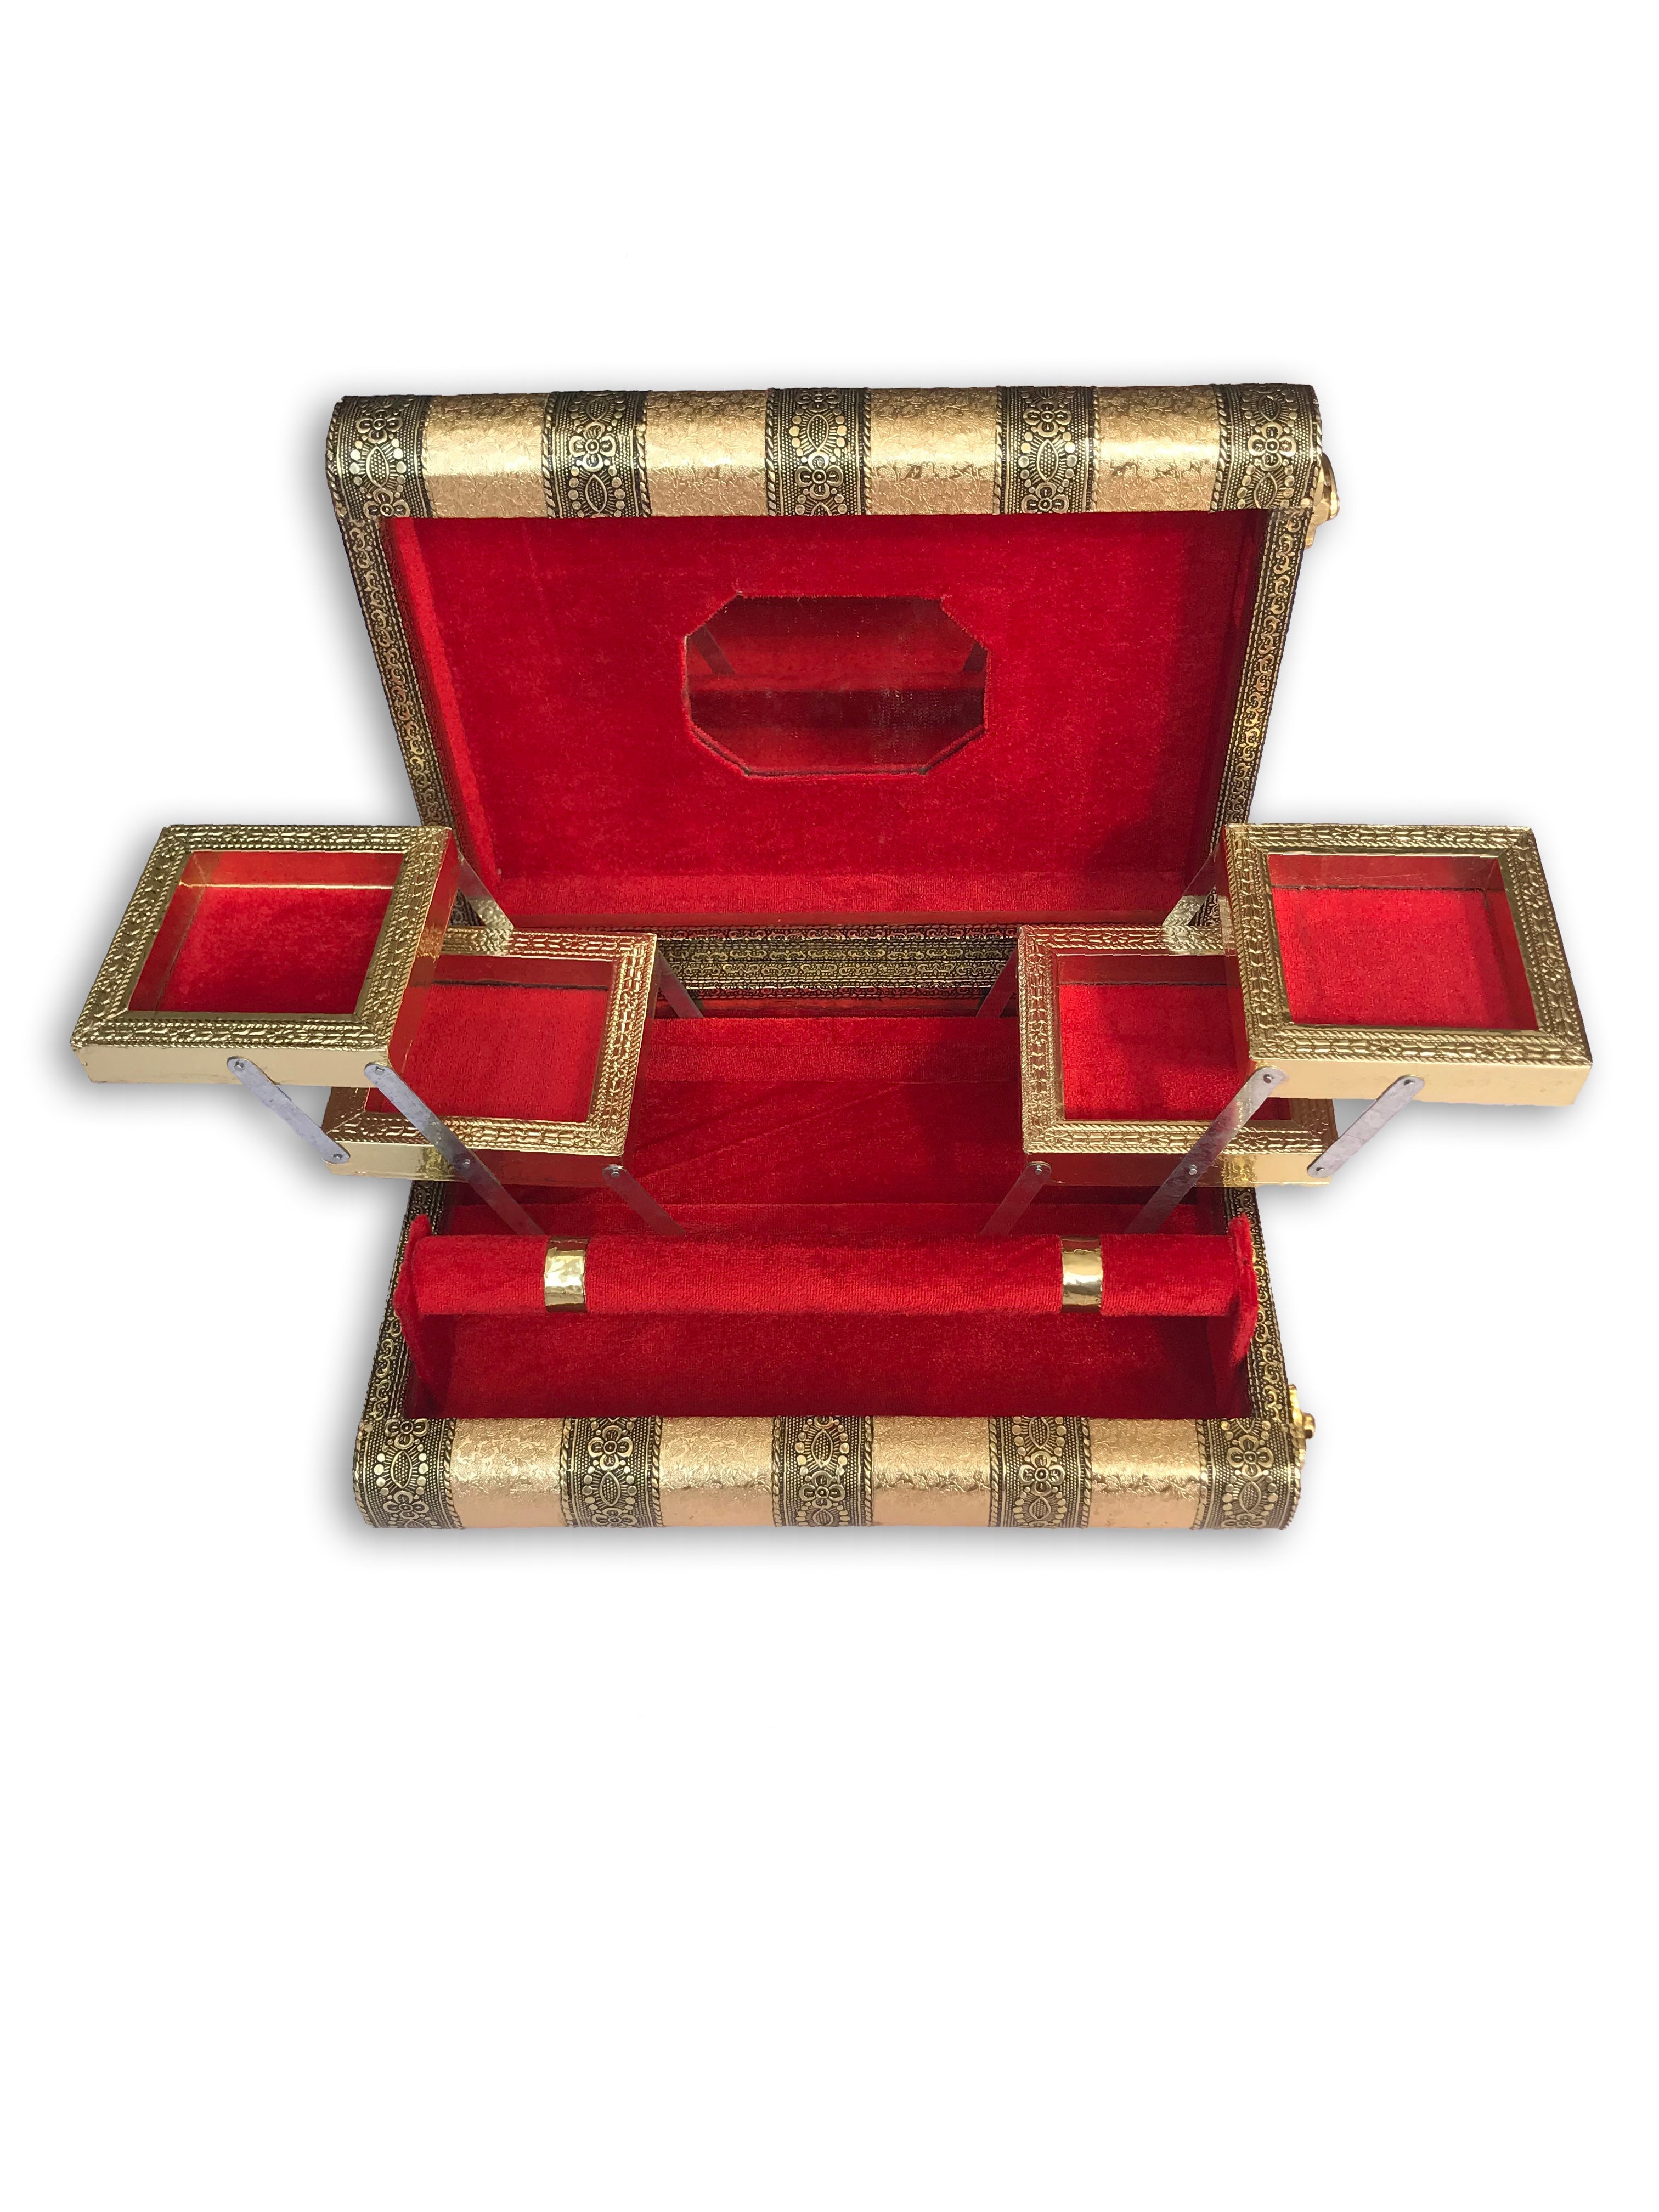 2124 Jewellery Jewel Boxes Storage Box Organizer Gift Box for Women Necklace Earring Set Bangles Churi Gift for Women 